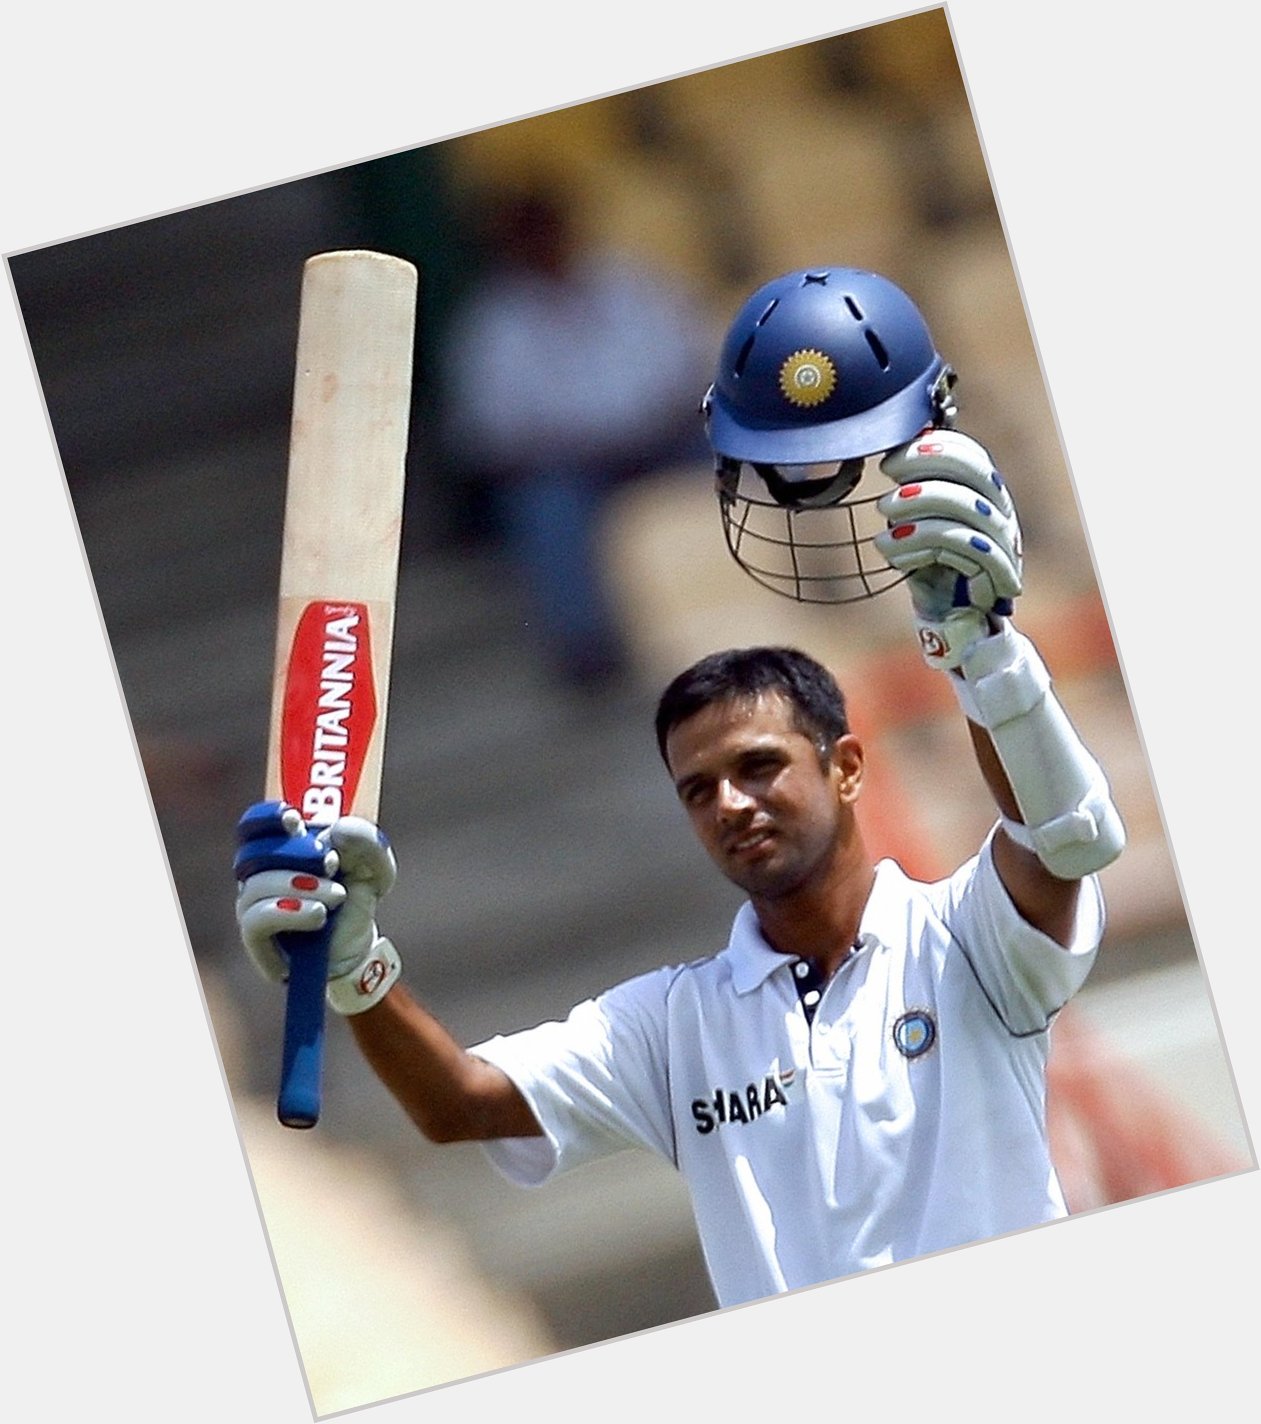 13,288 Test runs
10,889 ODI runs
48 international centuries
1 legendary career

Happy Birthday Rahul Dravid! 